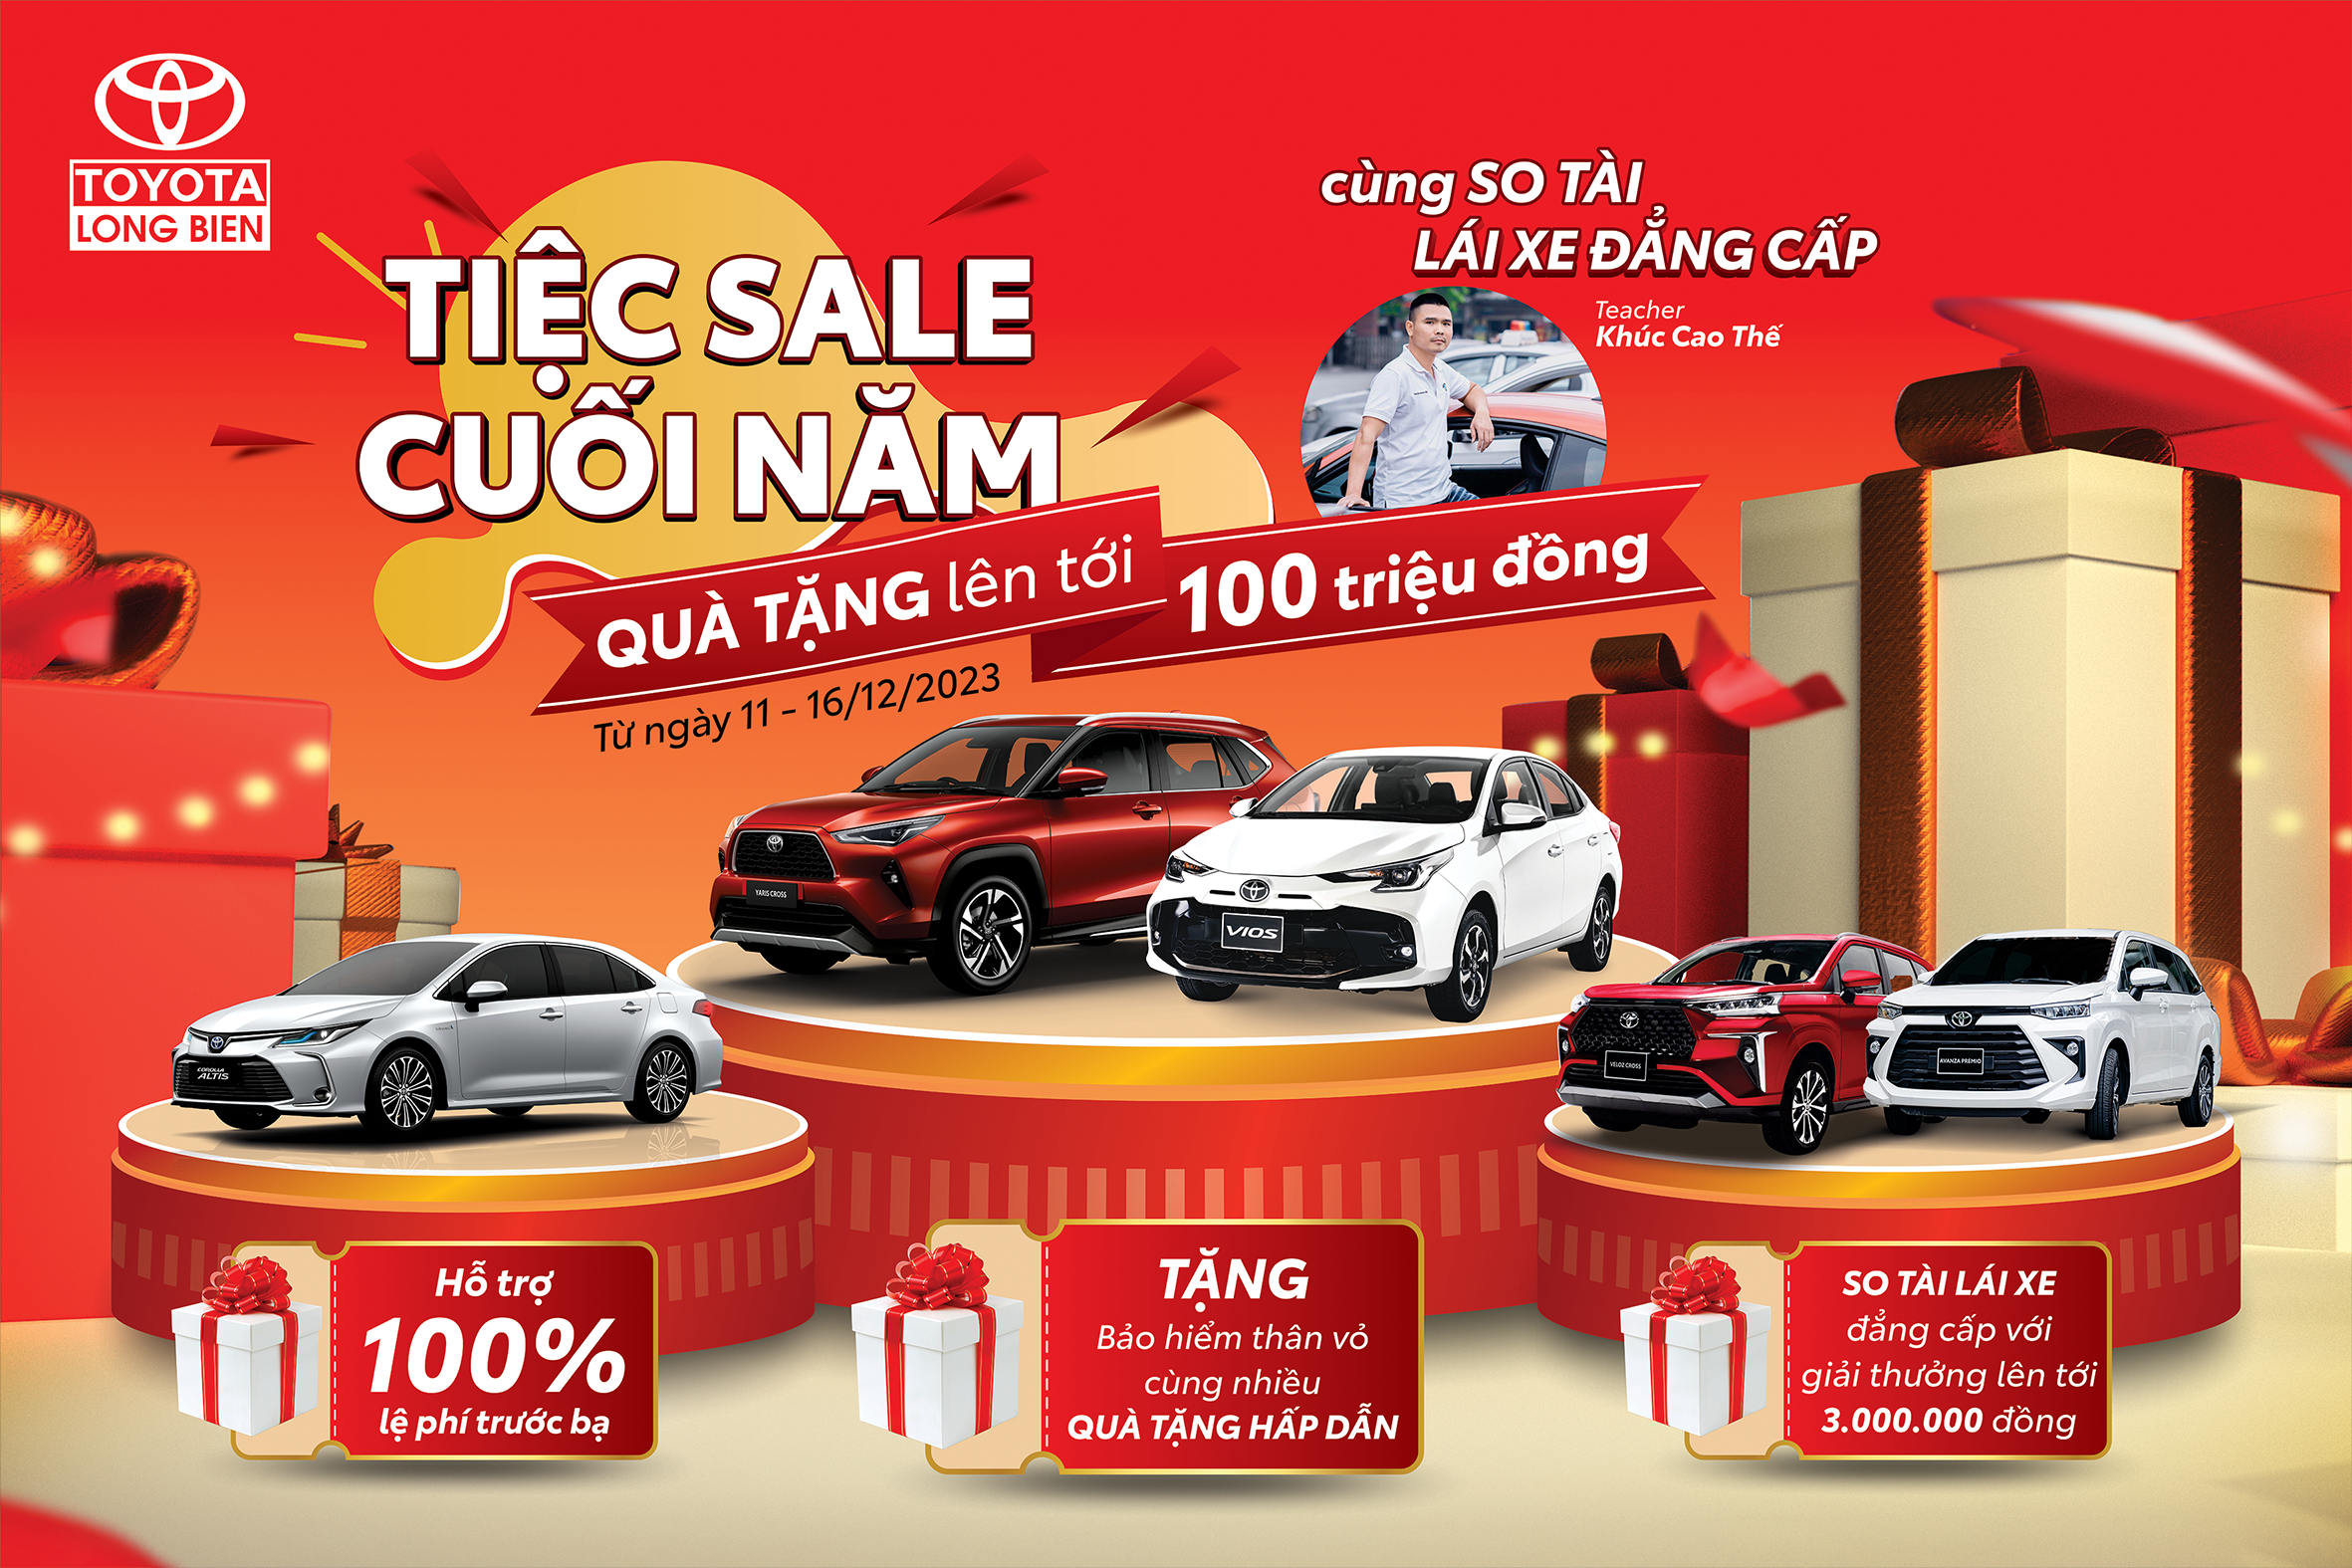 Tiệc sale cuối năm hấp dẫn tại Toyota Long Biên